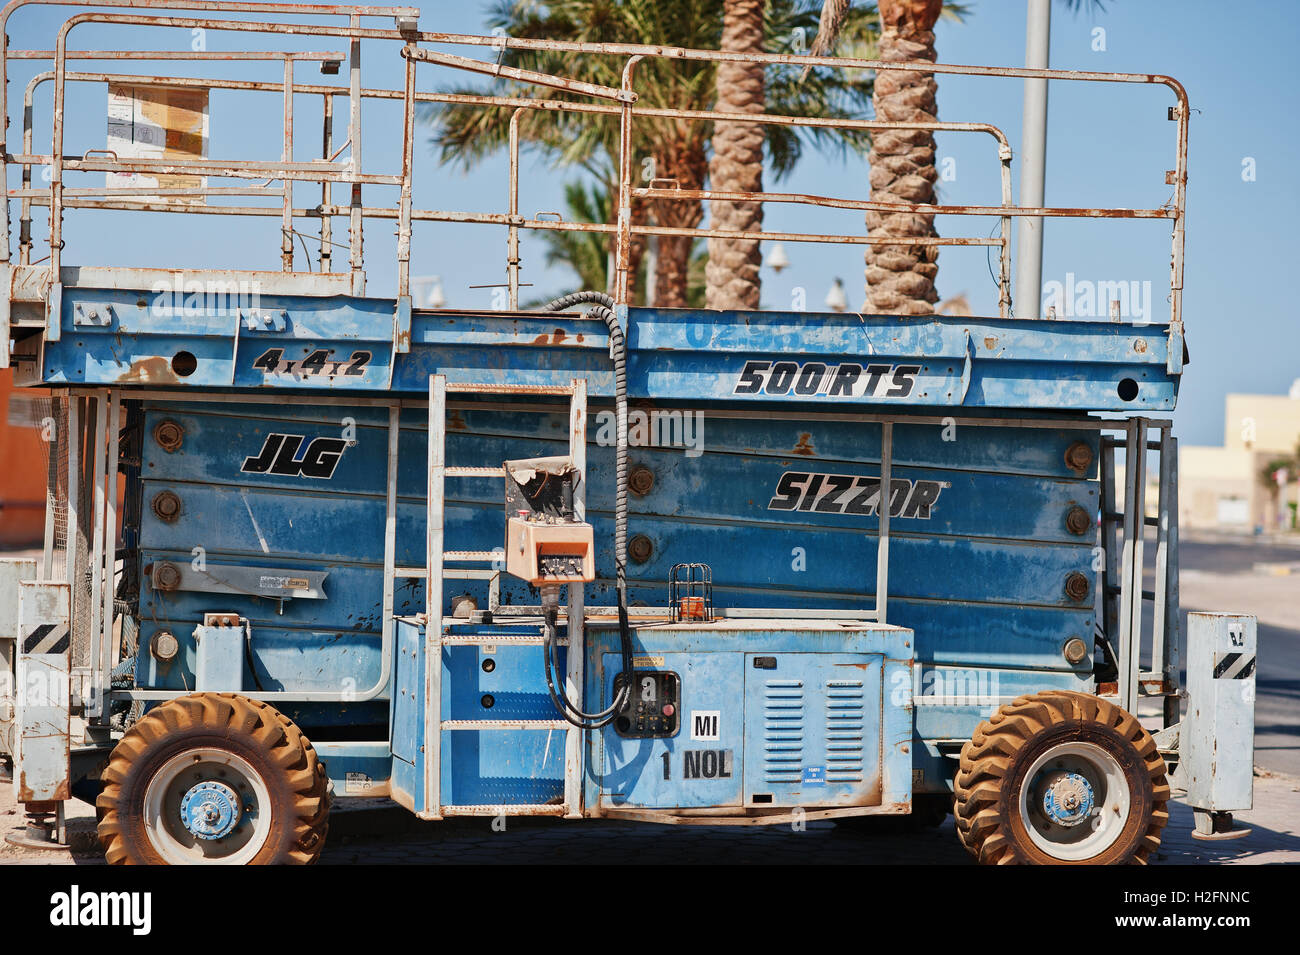 Hurghada, Egypt -20 August 2016: JLG 500RTS Sizzor Scissor lift car Stock Photo